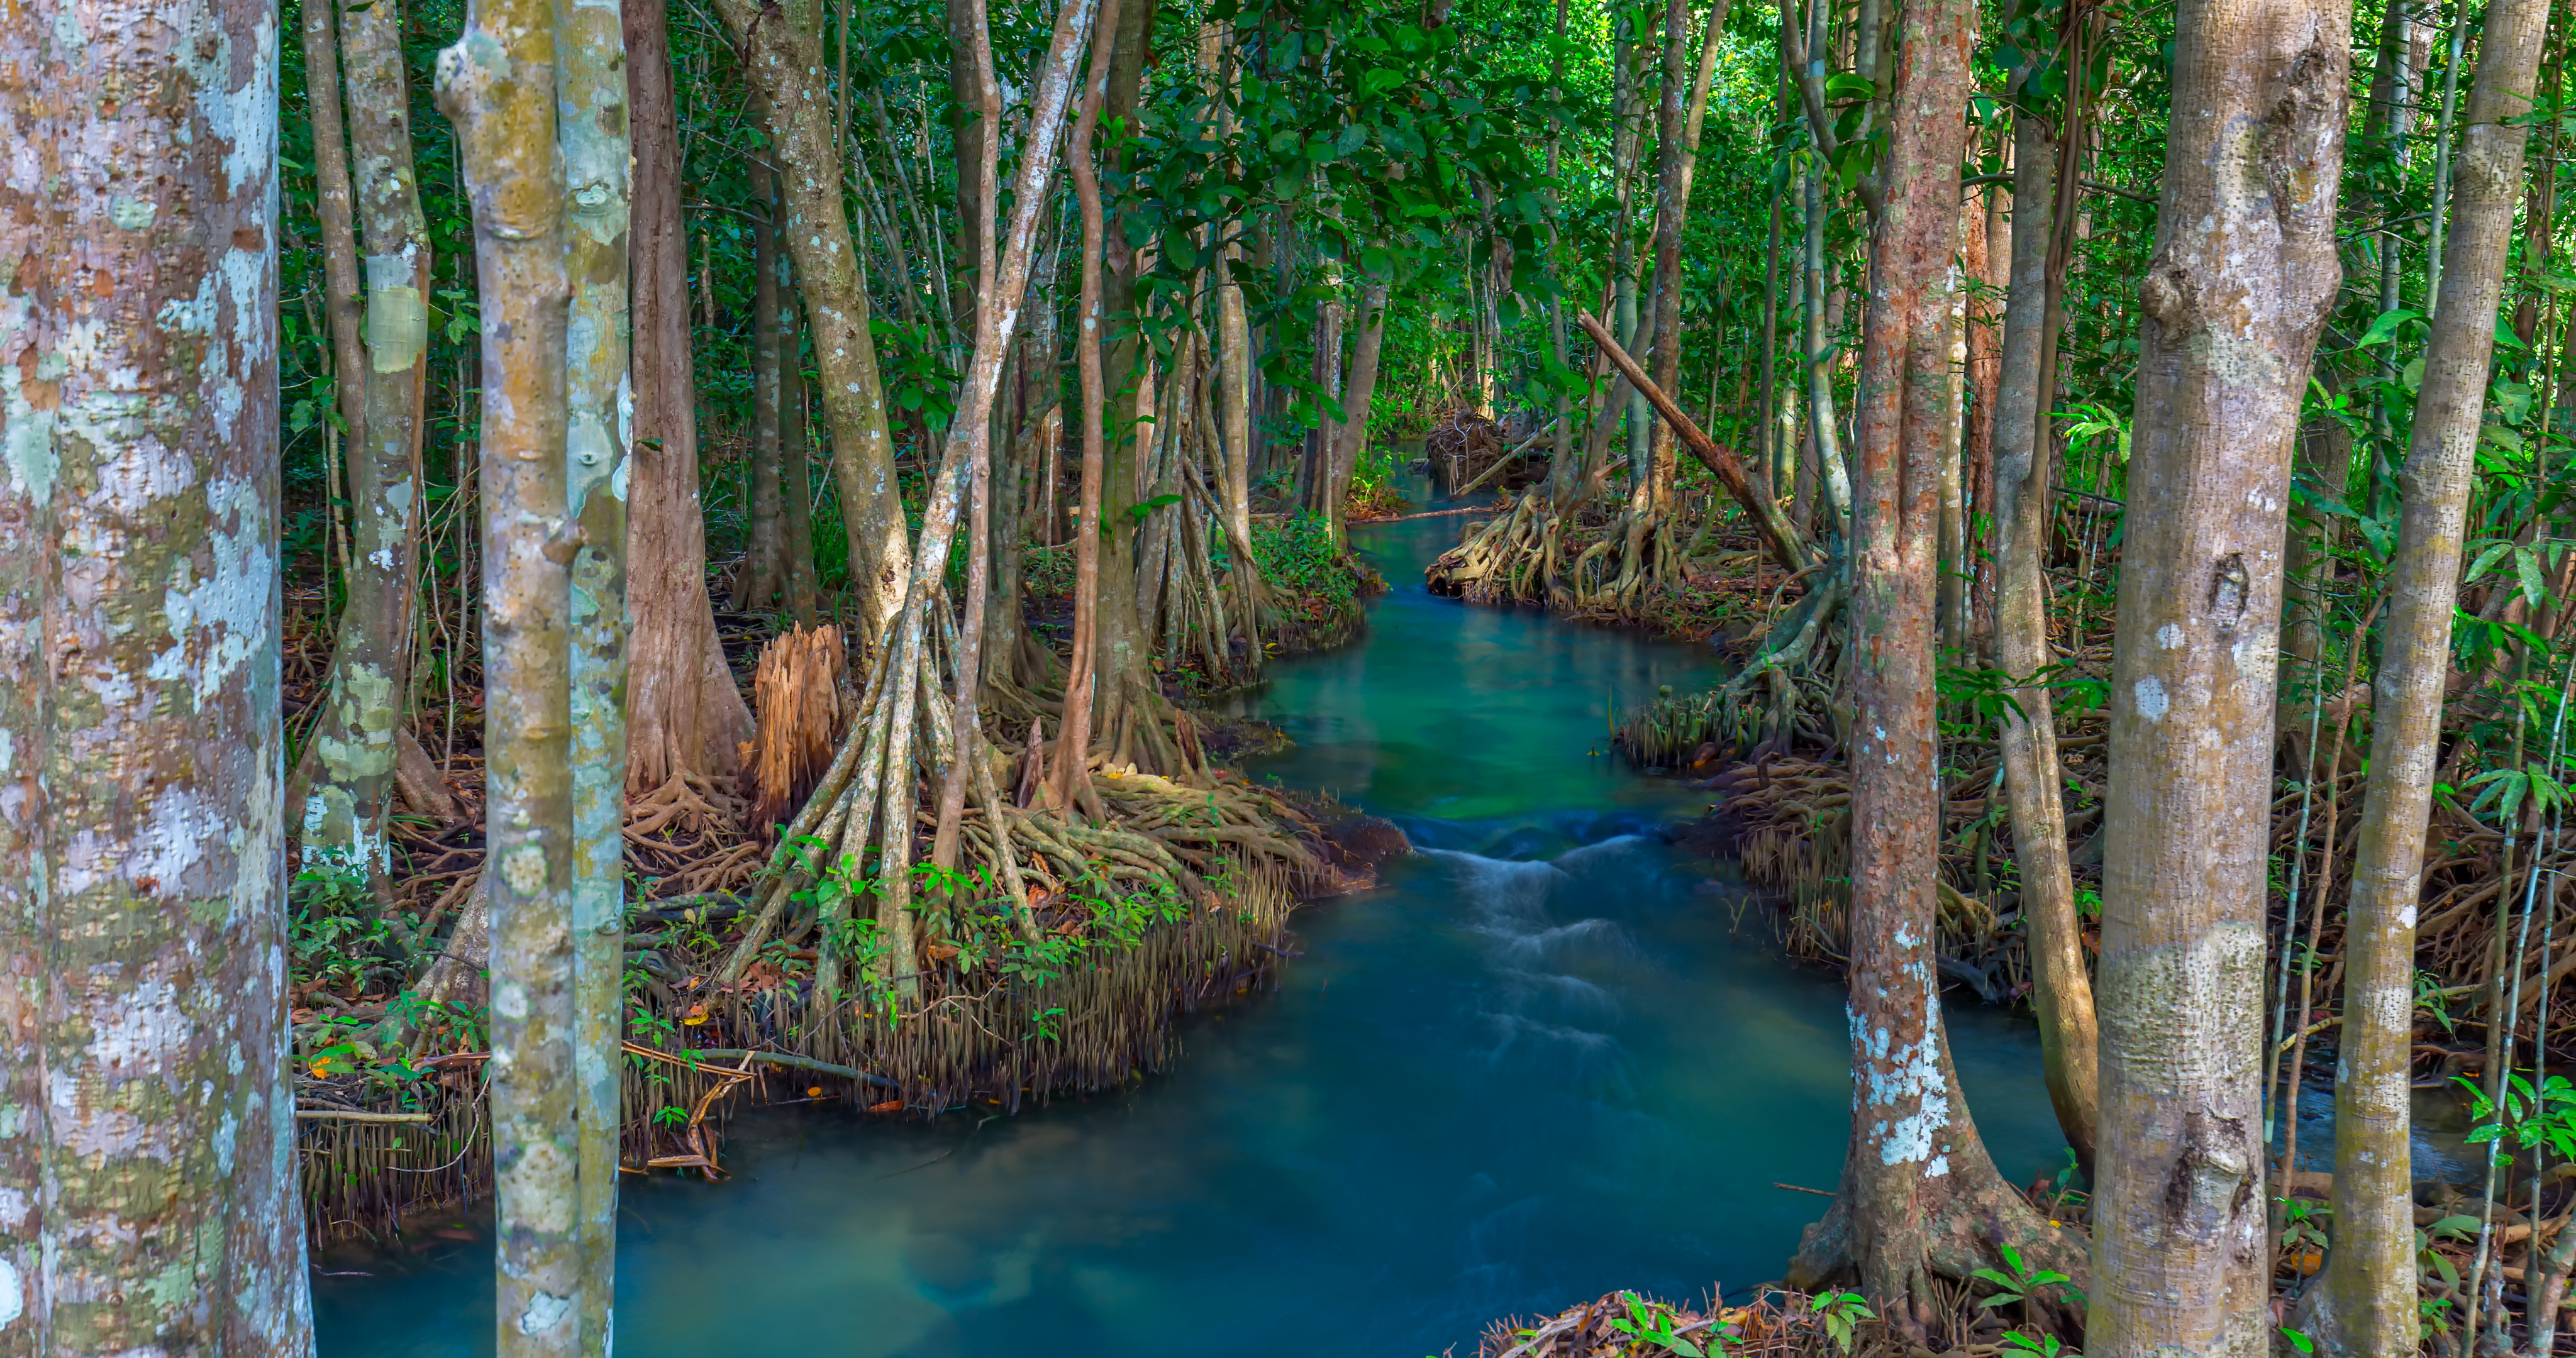 Обои на рабочий стол лес, озеро, emerald, tropical, mangrove, beautiful, мангровый, lake, тропический, река, forest, tree, landscape